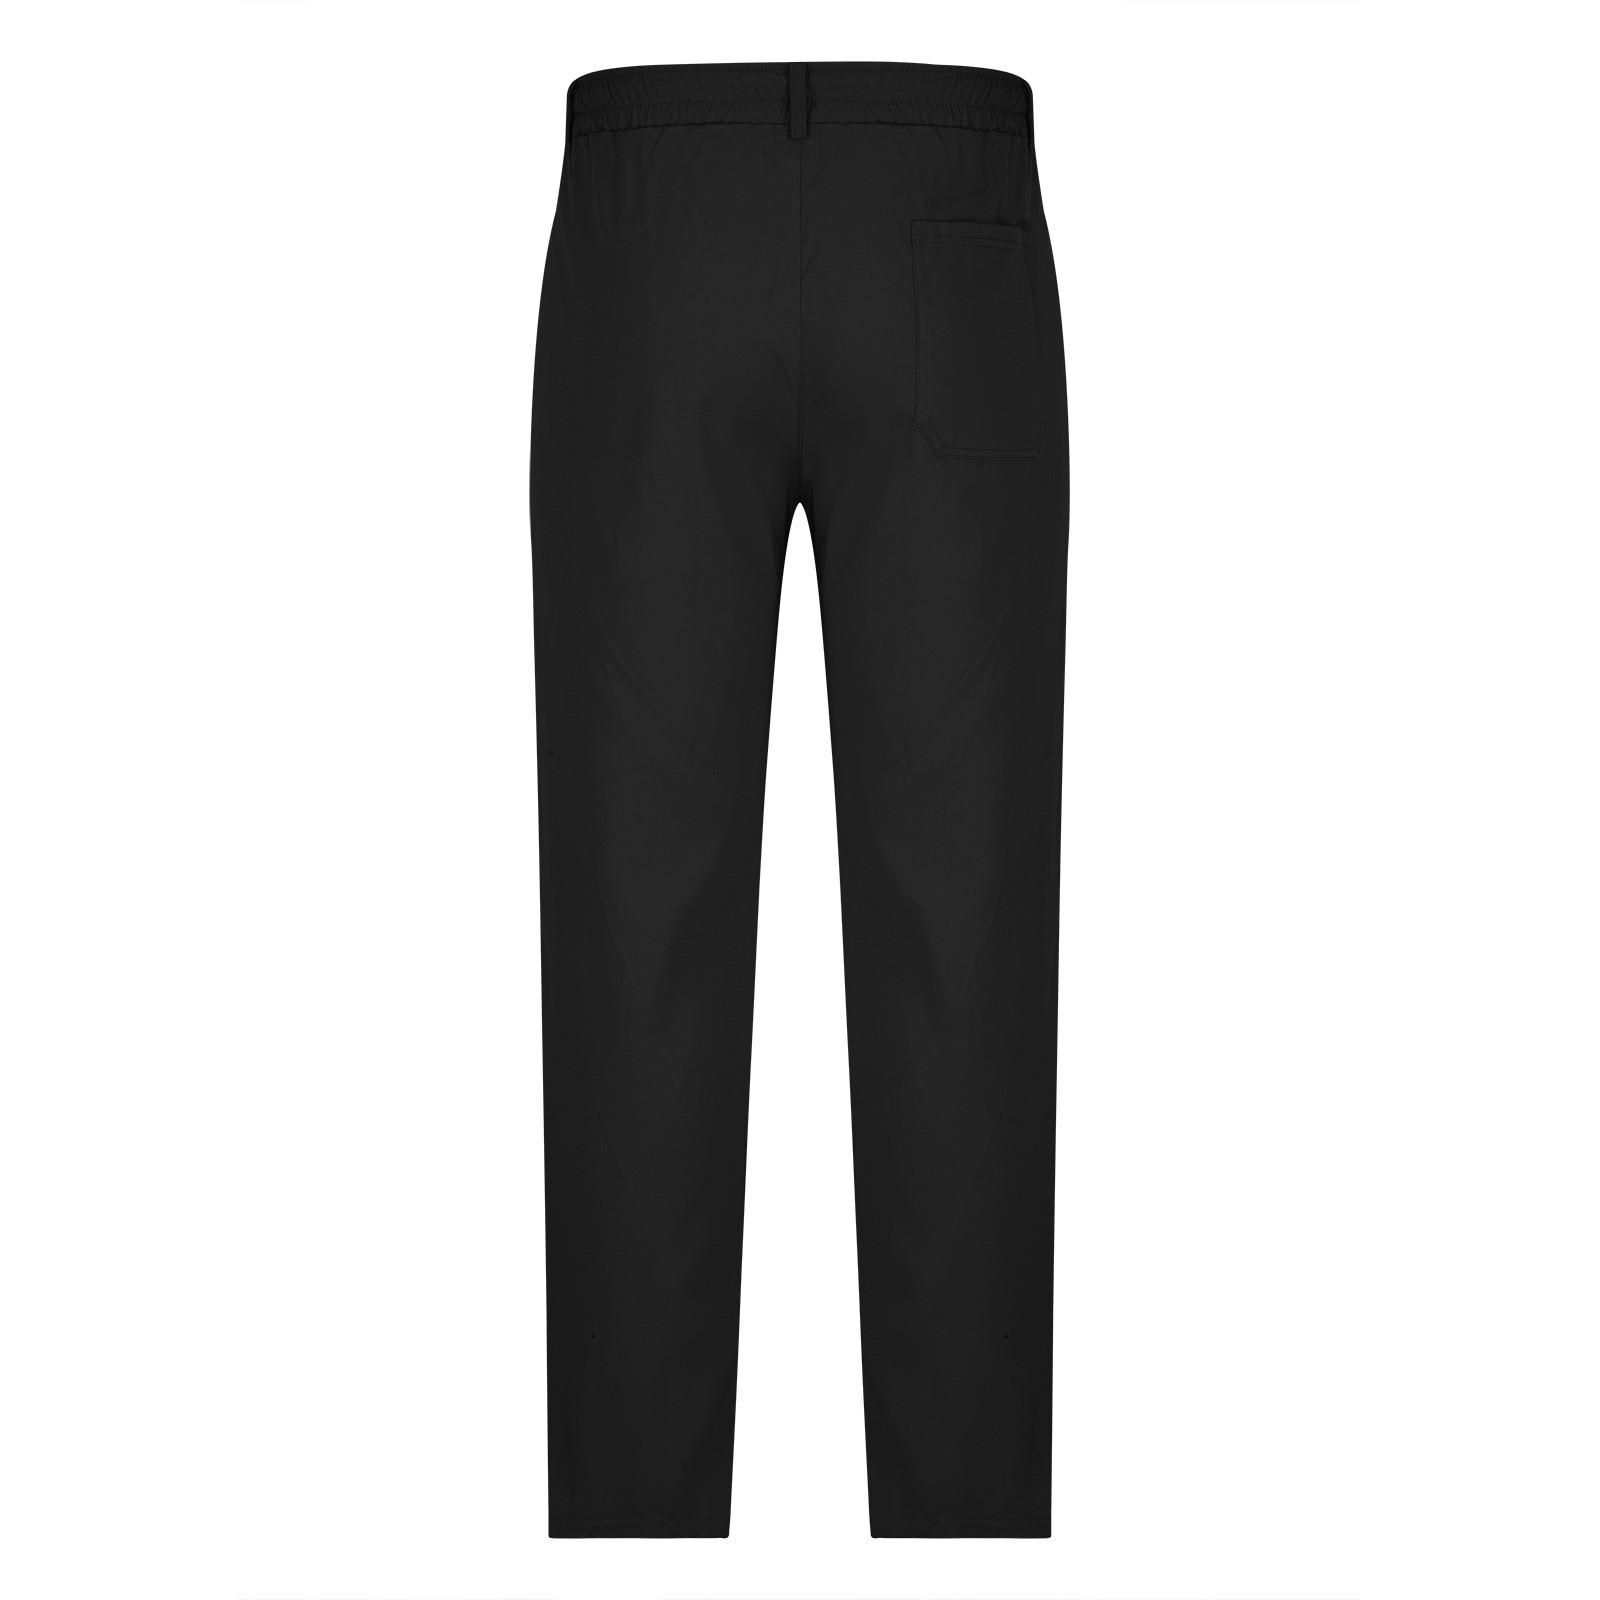 Tdoqot Chinos Pants Men- Drawstring Comftable Elastic Waist Slim Casual Cotton Mens Pants Black - image 5 of 6